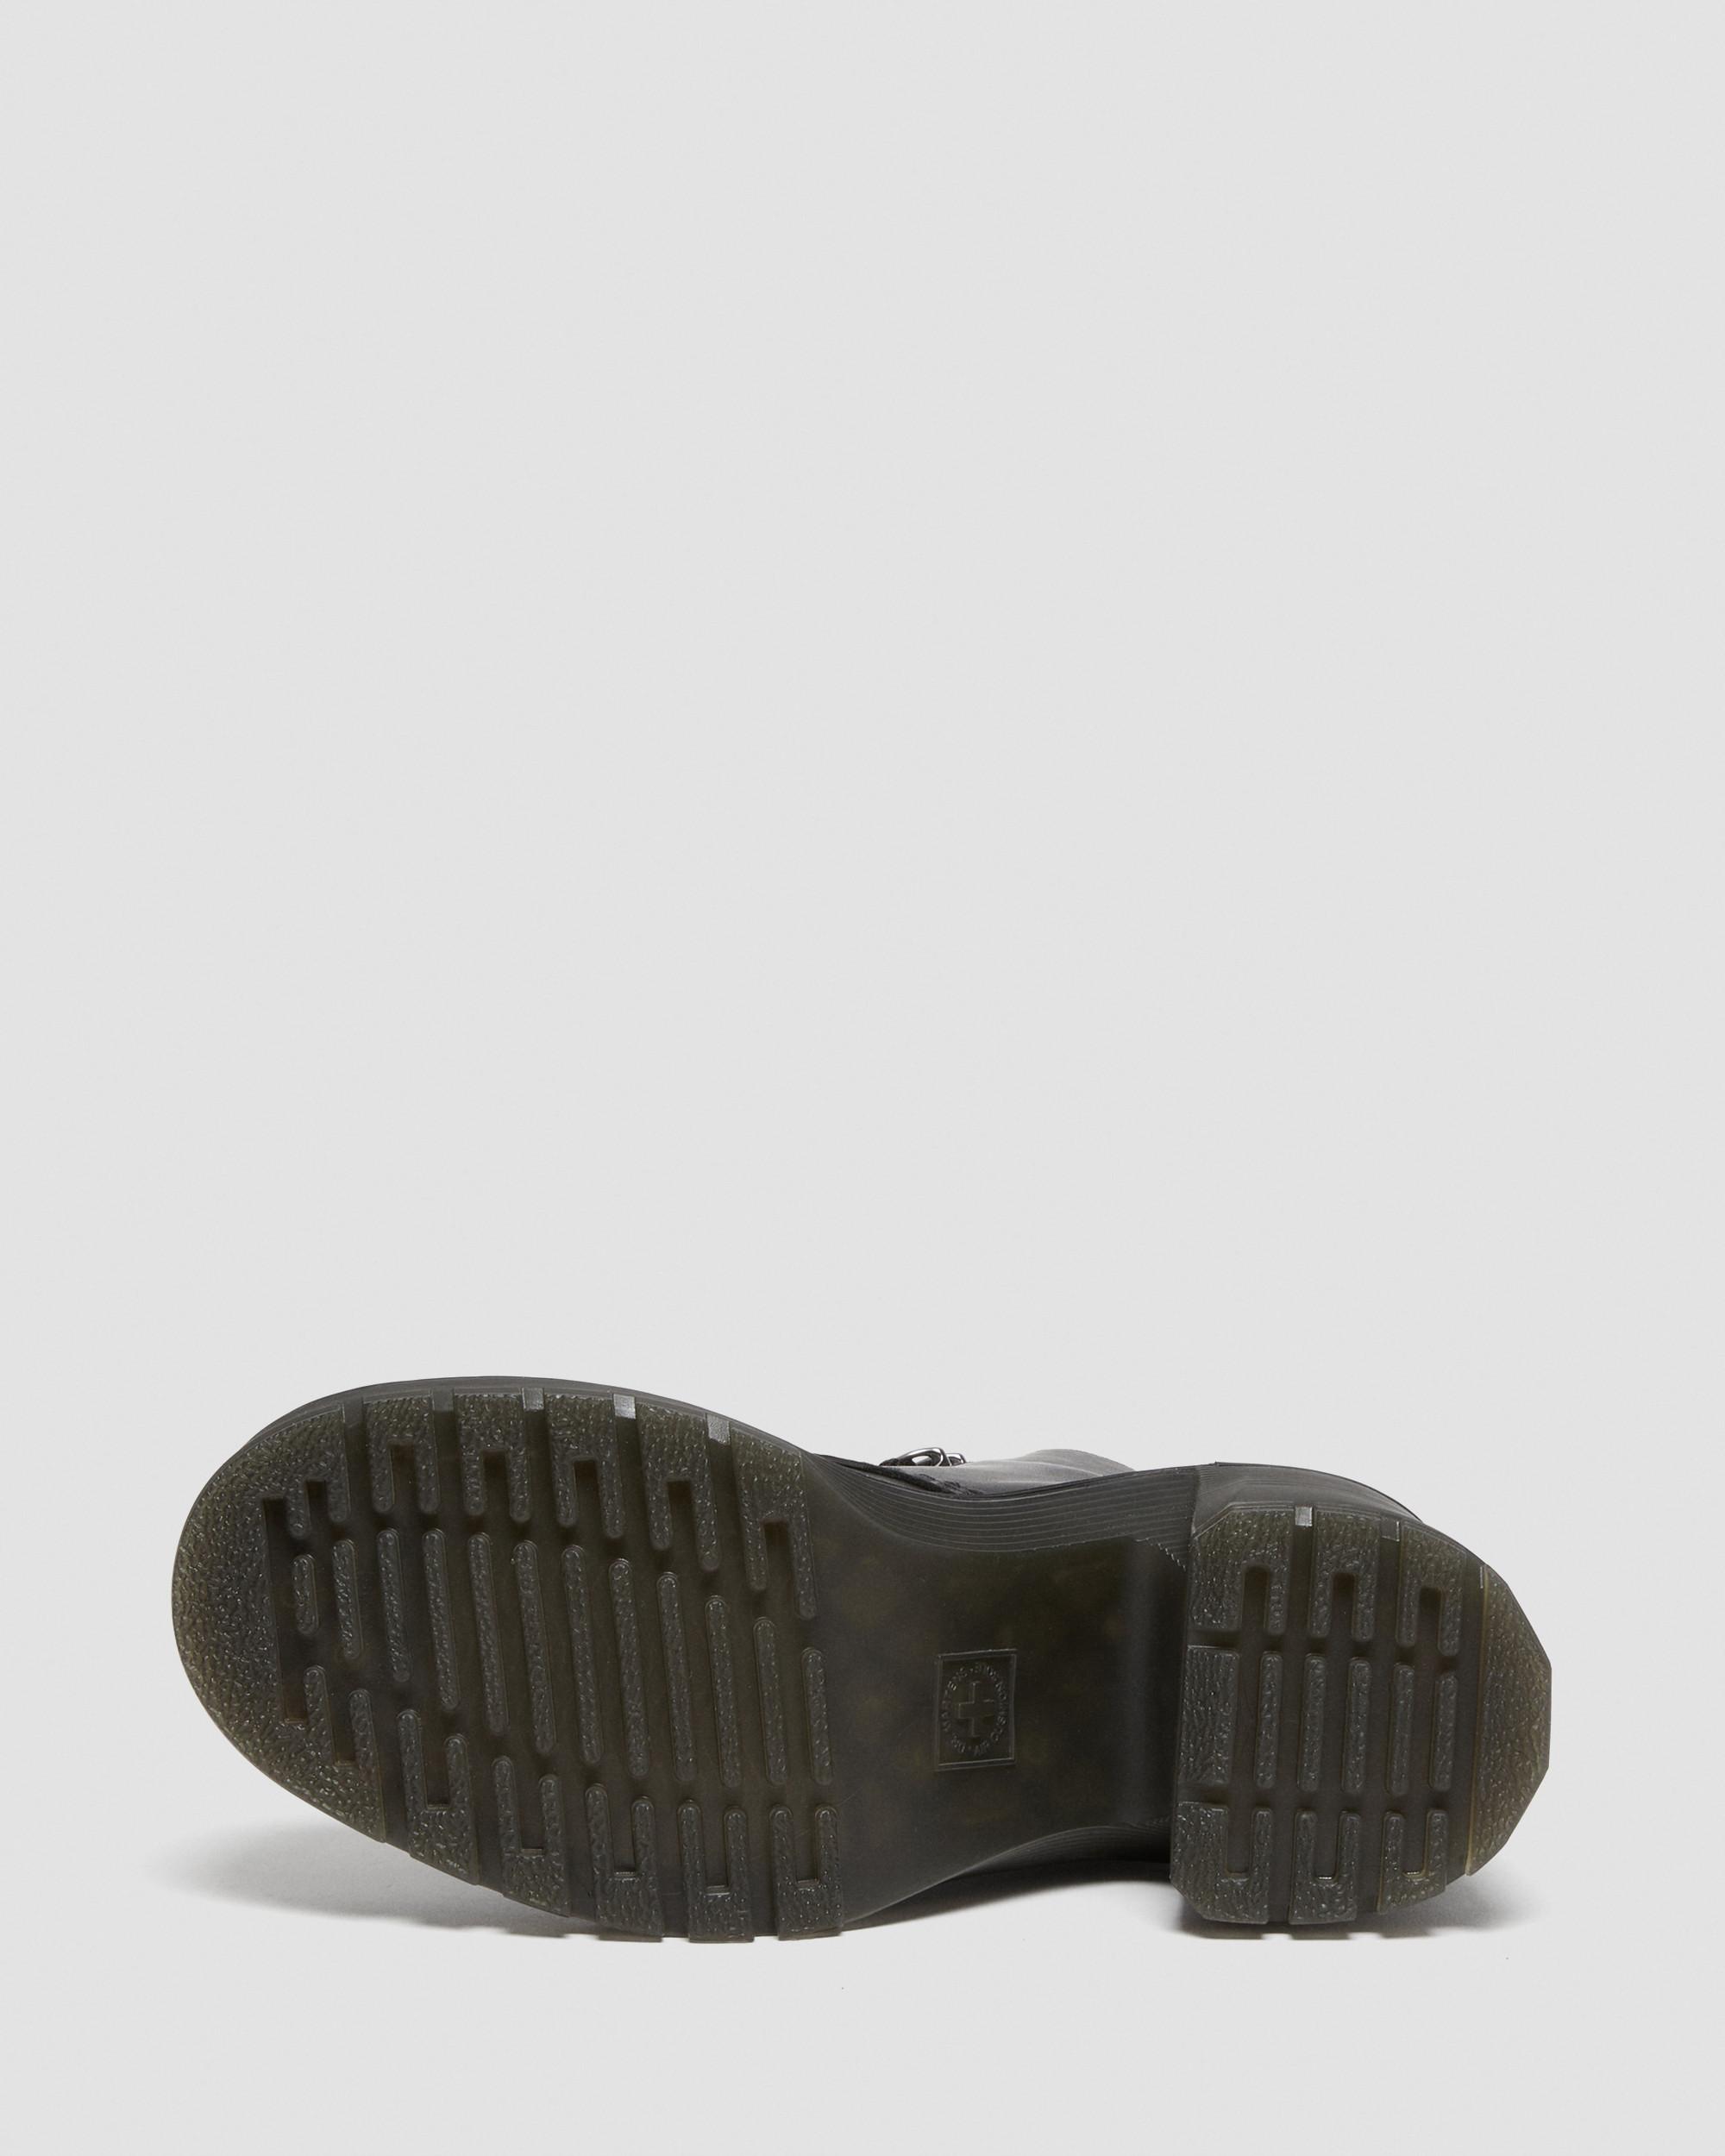 Jesy Sendal Leather Heels Black in Black